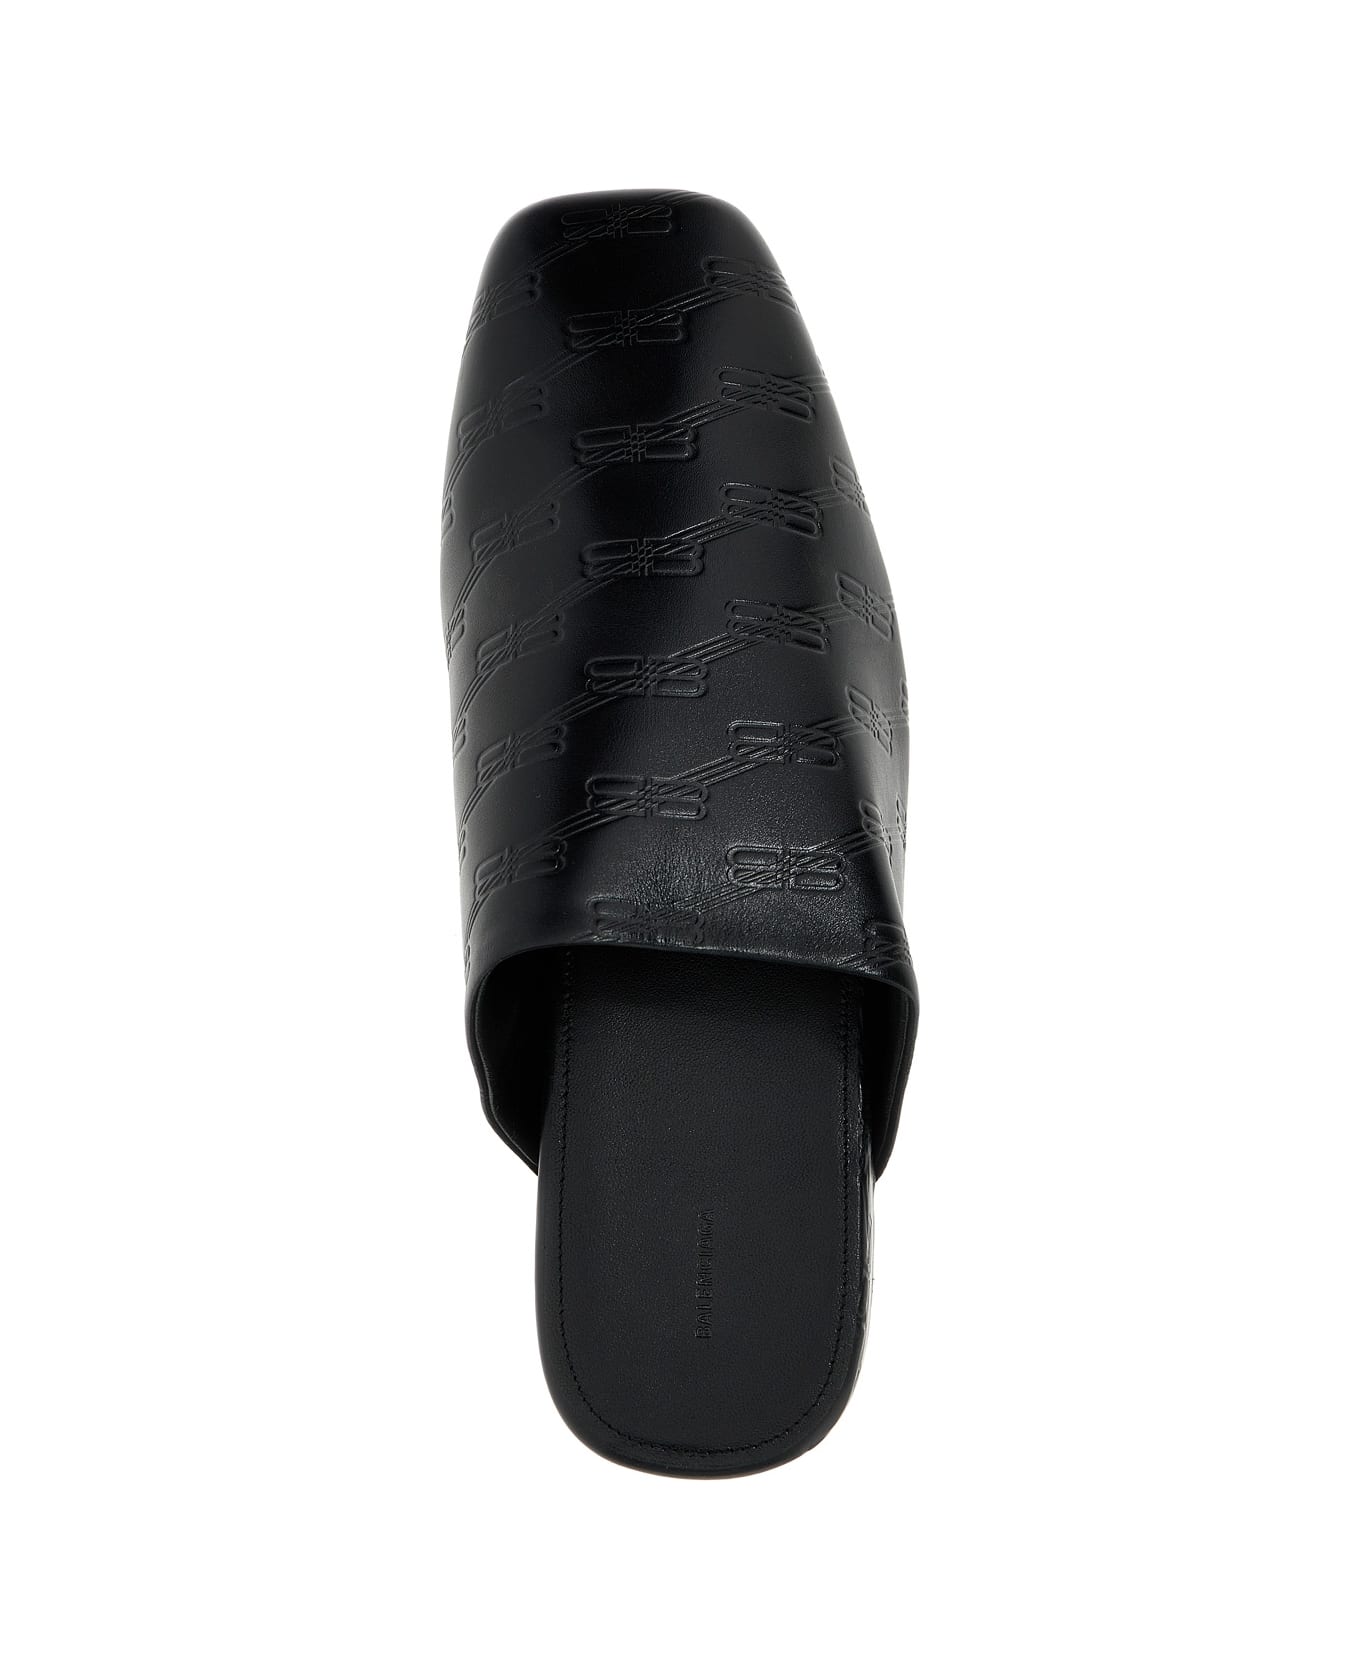 Balenciaga Slippers - Black